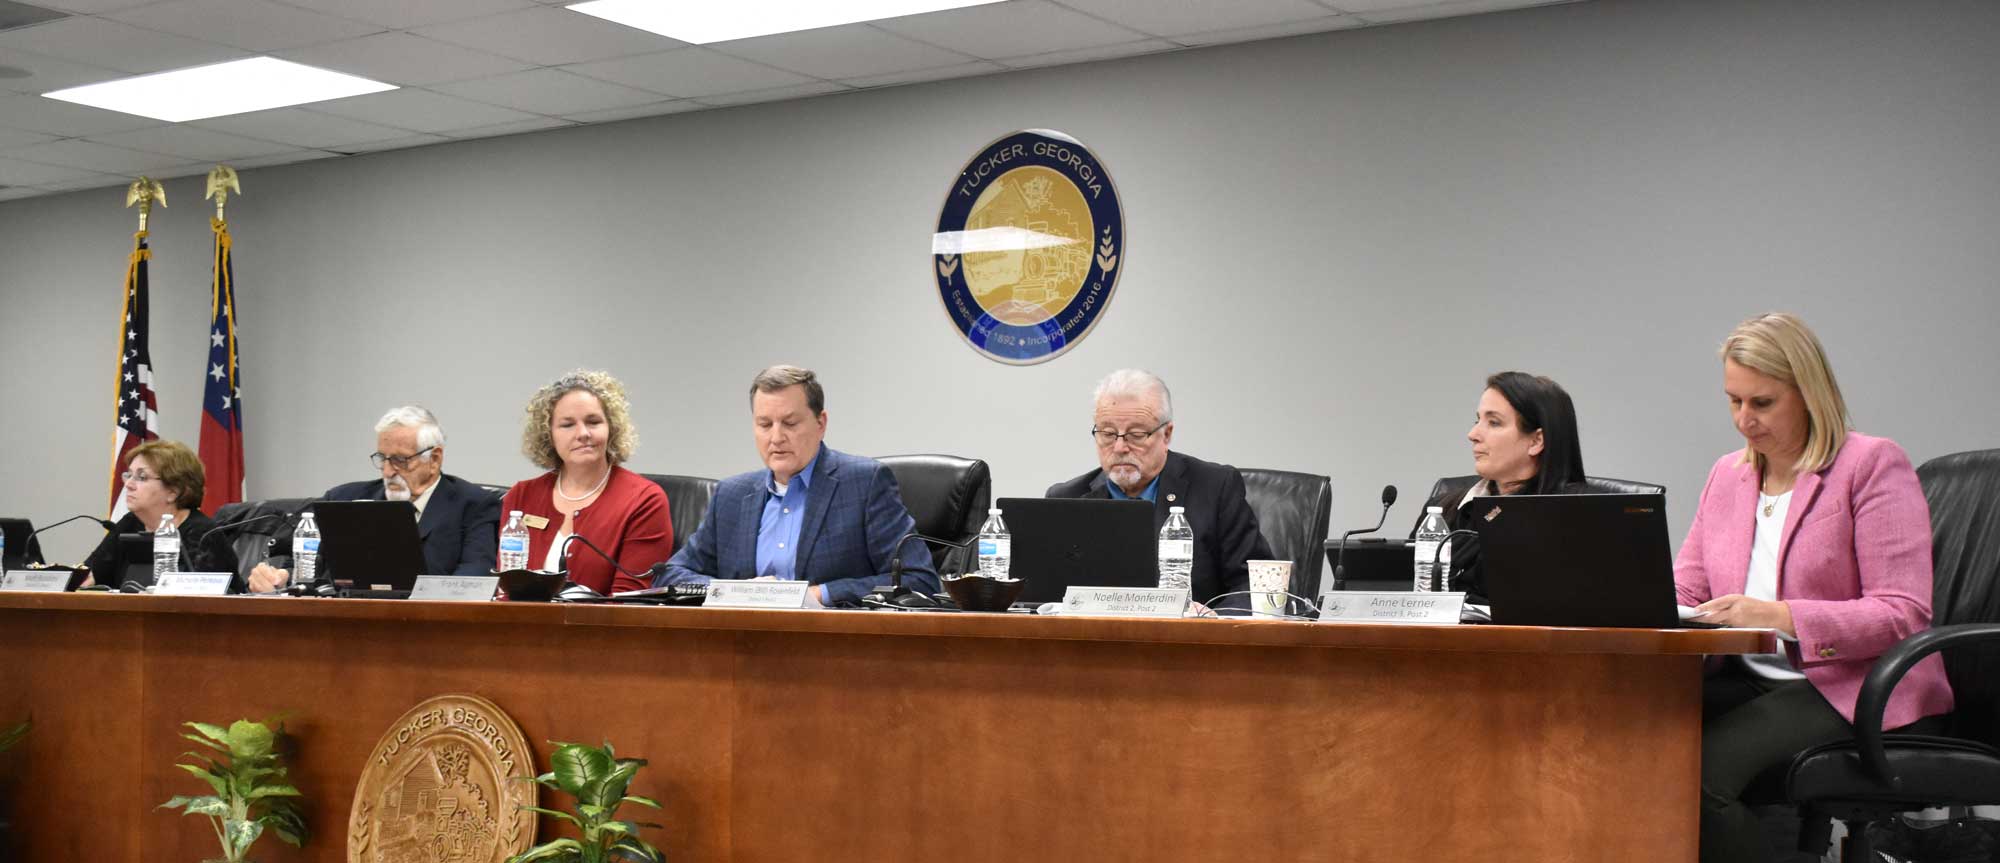 Tucker city council meeting November 2019.